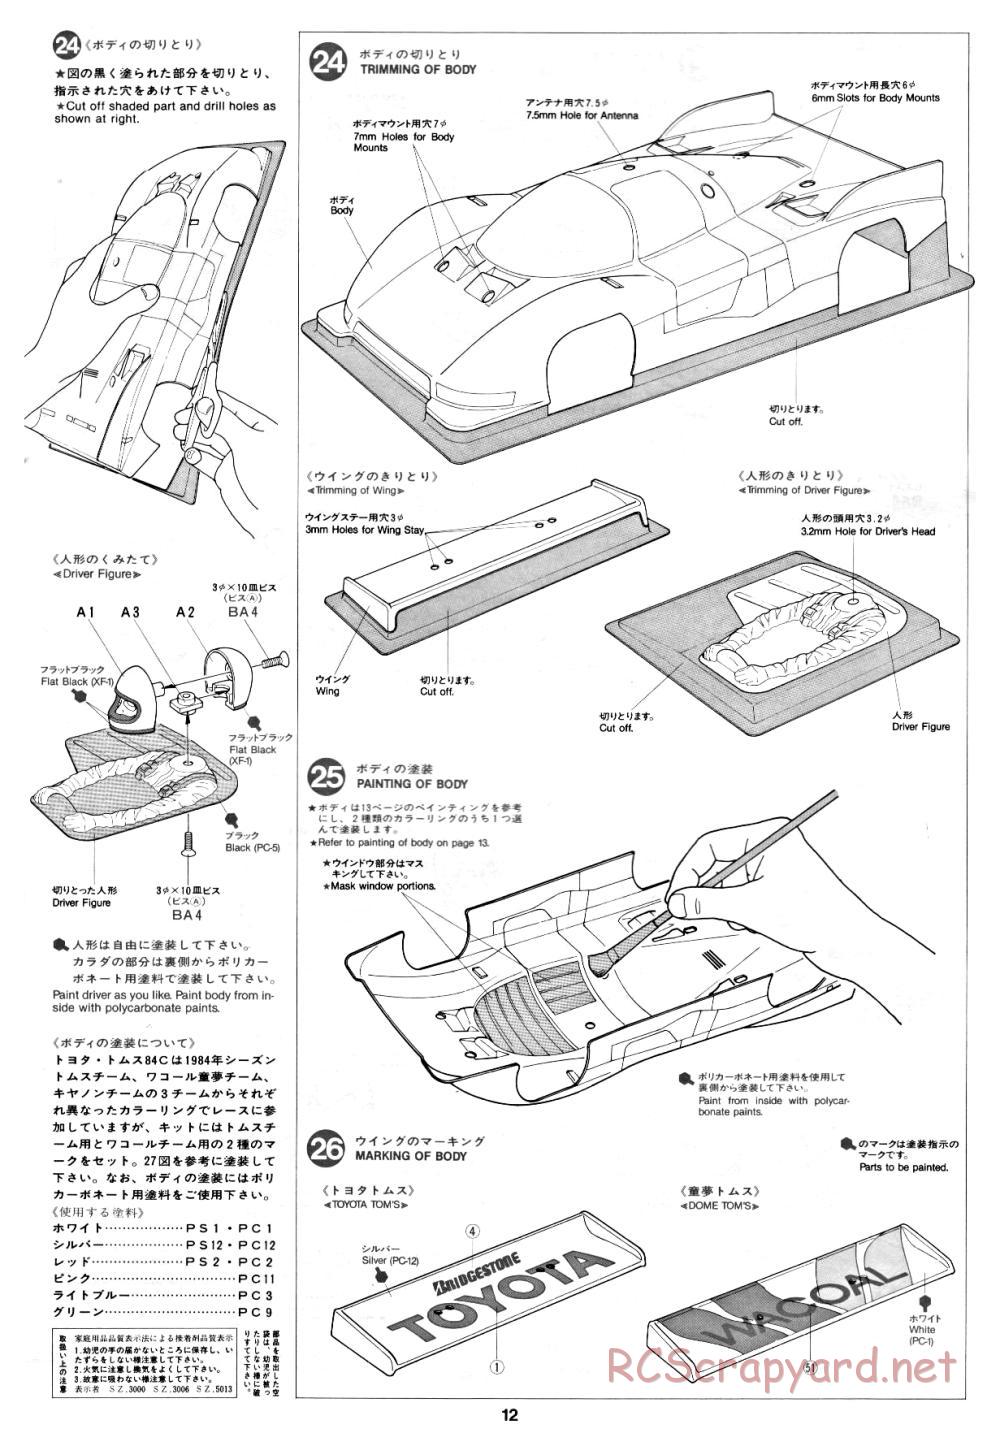 Tamiya - Toyota Tom's 84C - RM MK.6 - 58049 - Manual - Page 12